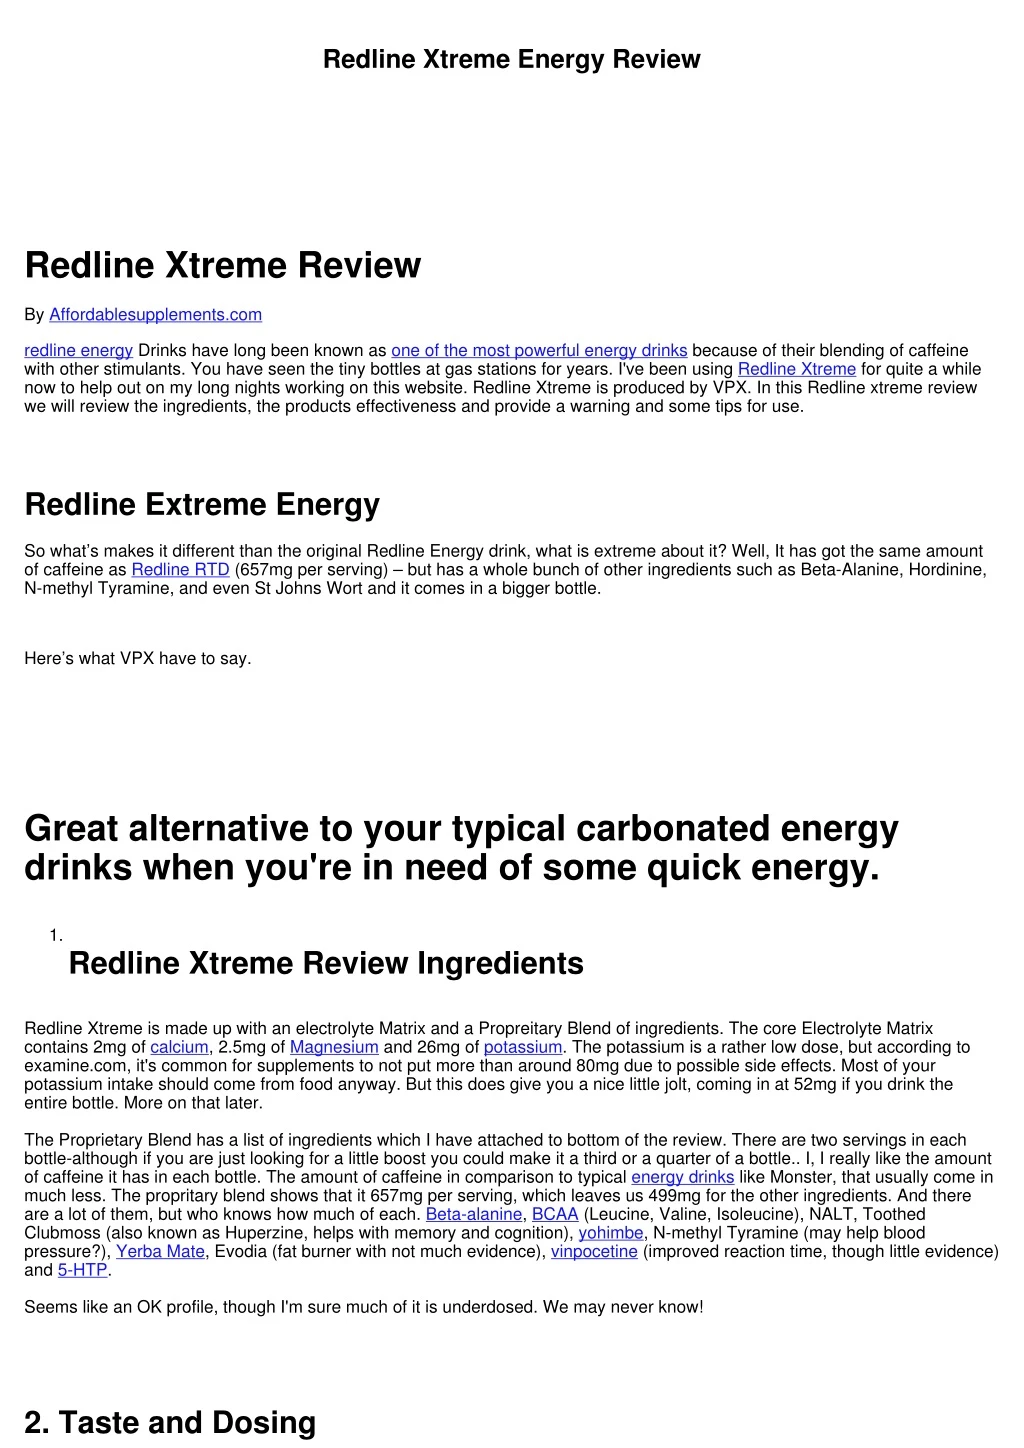 redline xtreme energy review